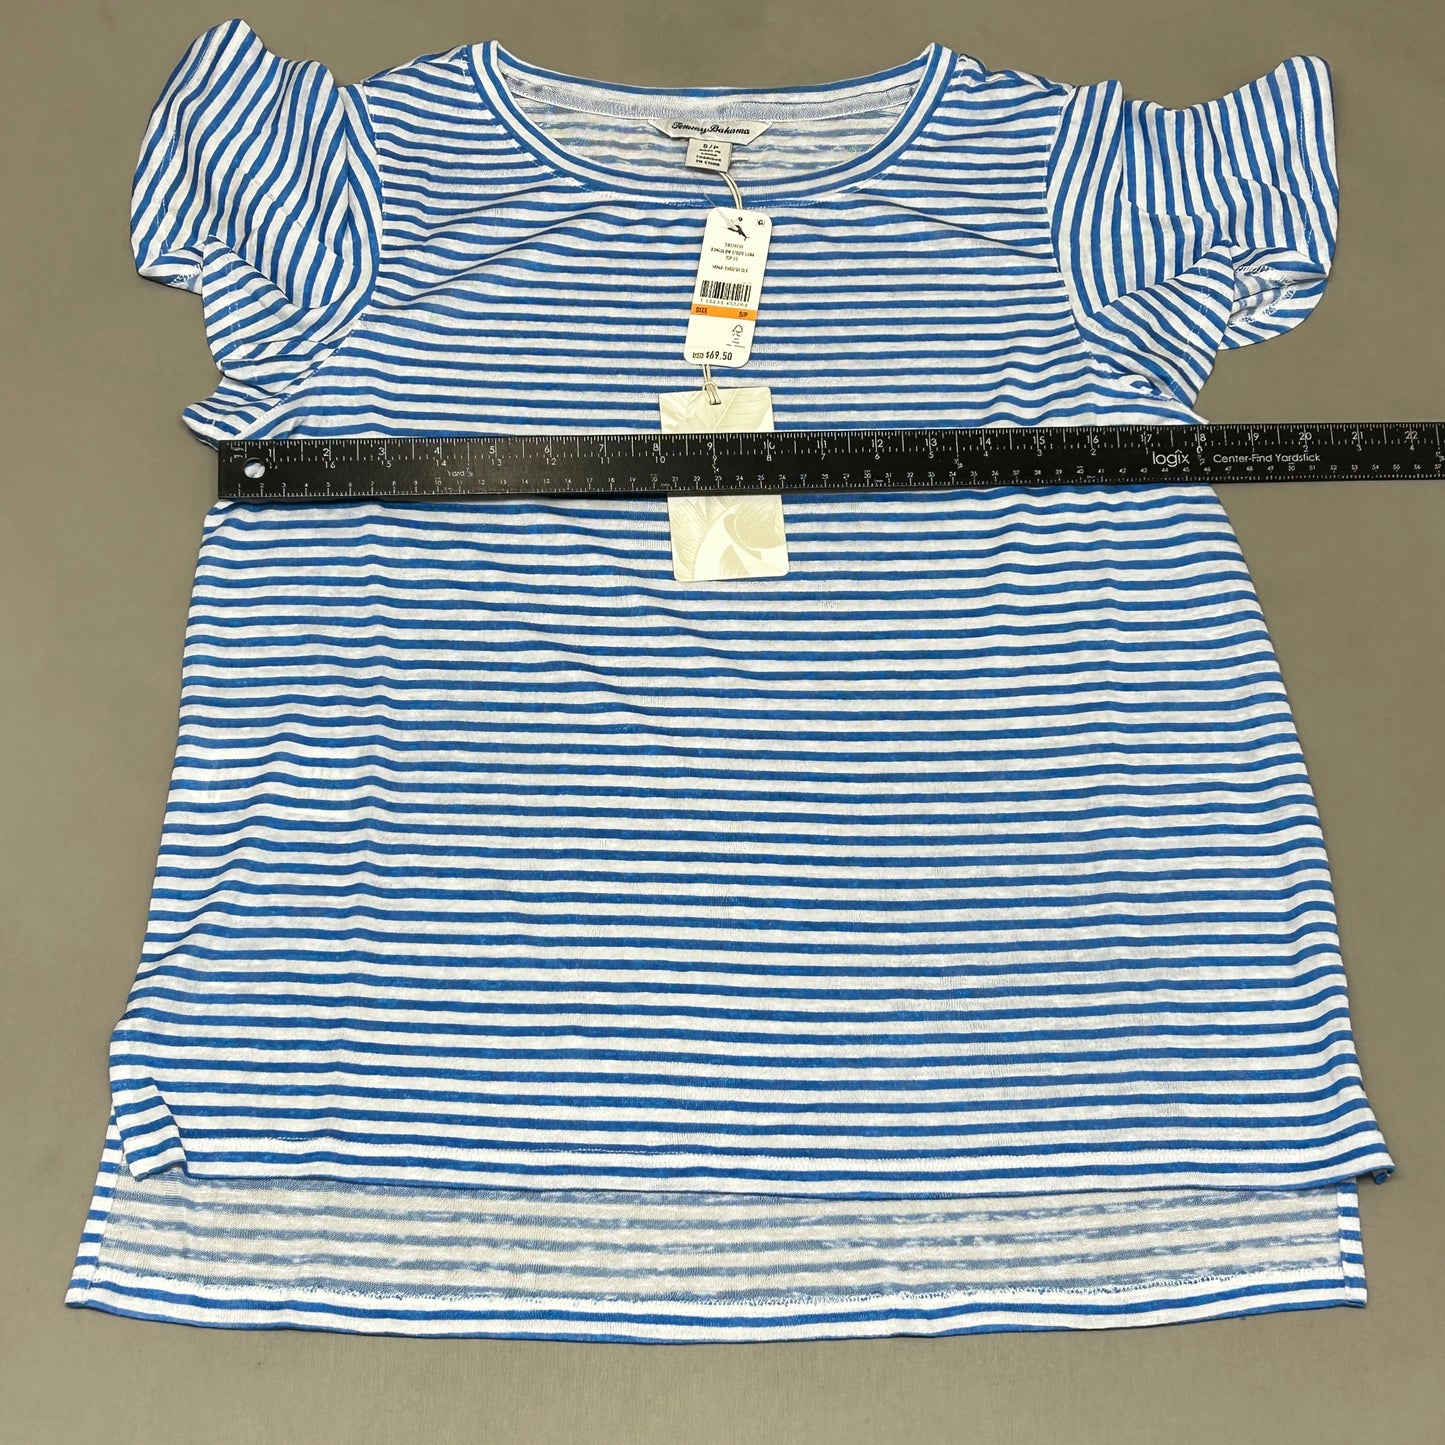 TOMMY BAHAMA Women's Bungalow Stripe Lana Top Short Sleeve Blue/White Size S(New)